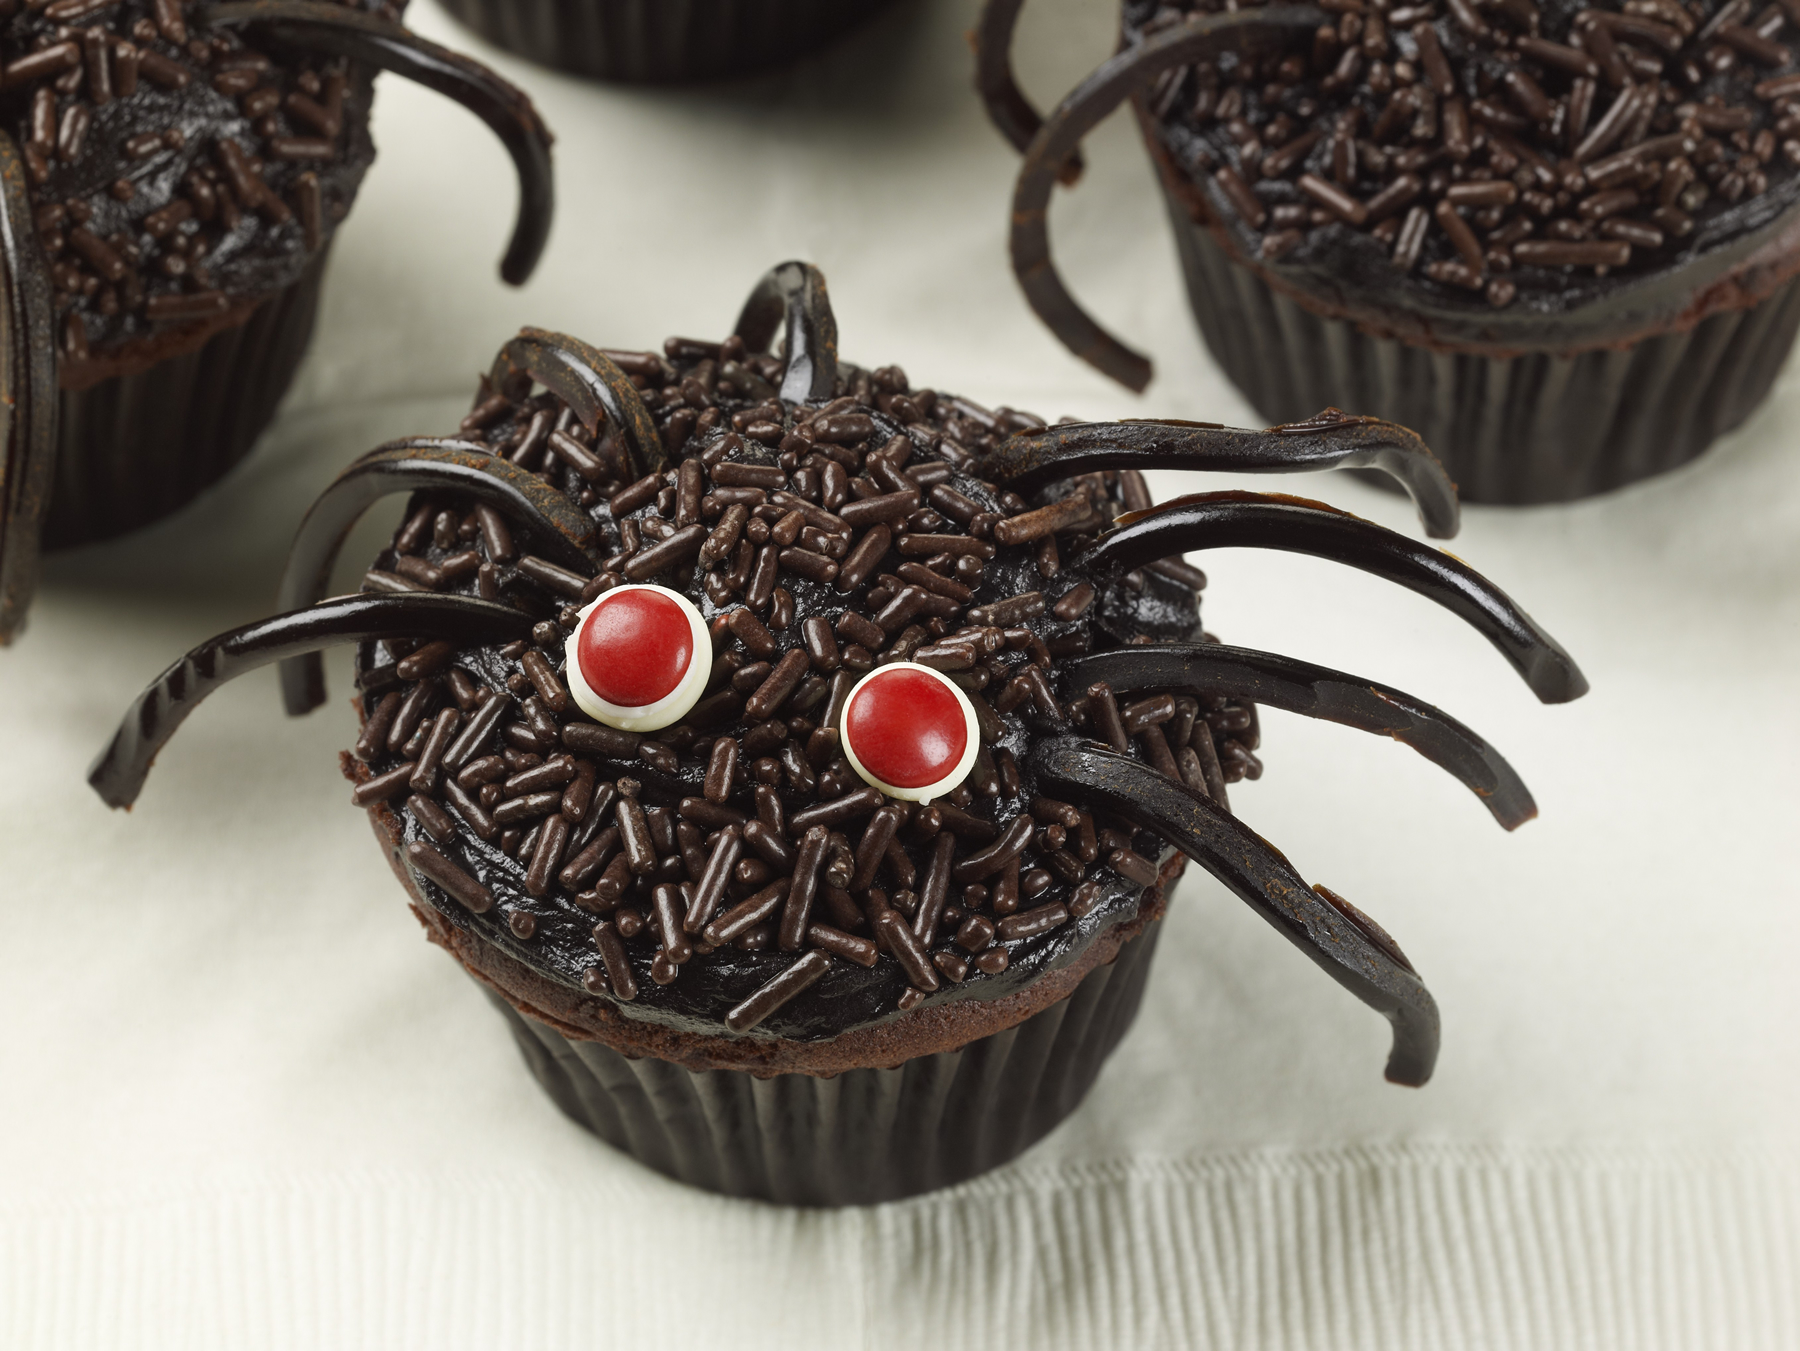 Creepy Crawly Spider Cupcakes